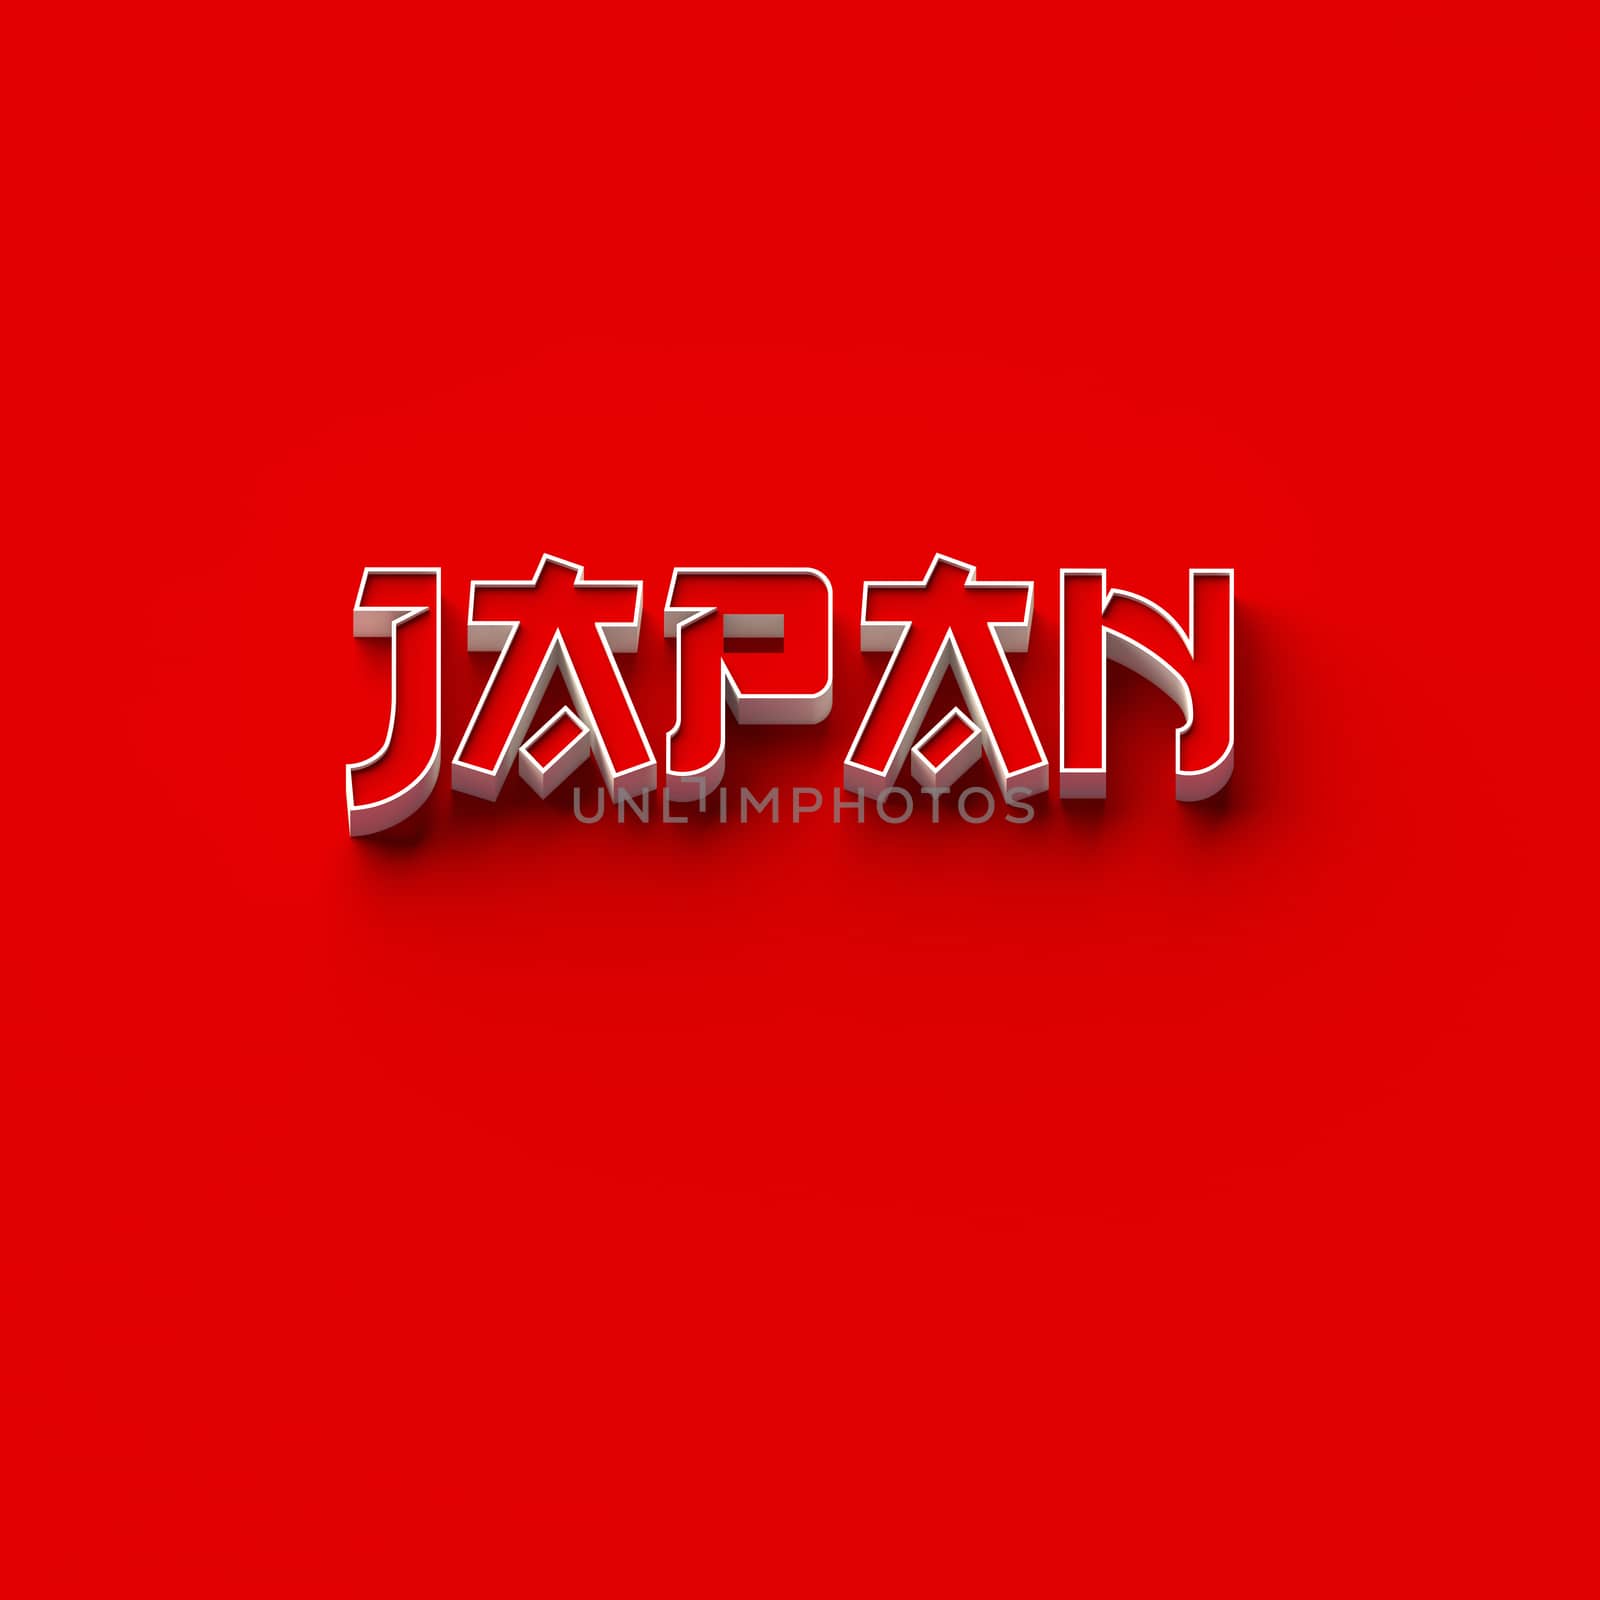 3D RENDERING WORDS 'JAPAN' ON RED PLAIN BACKGROUND